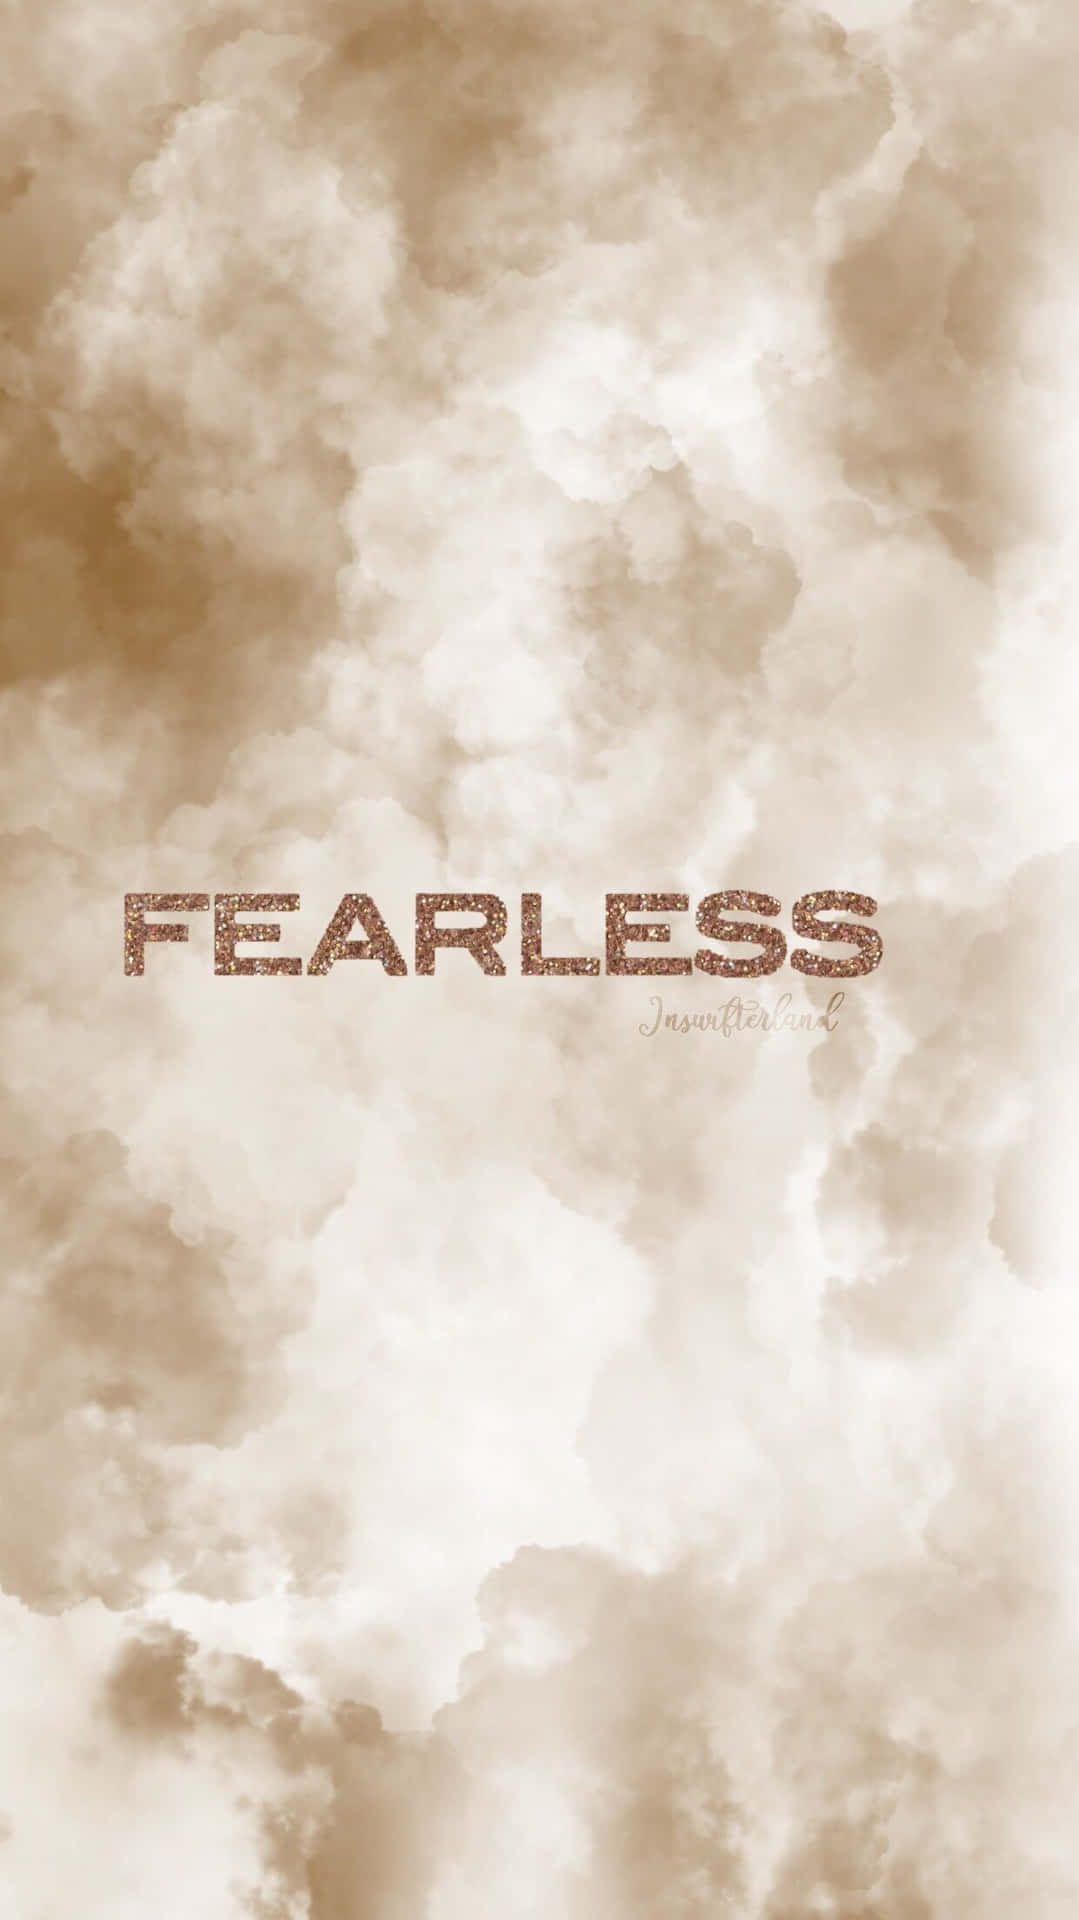 Fearless Taylor Swift Lyrics Wallpaper